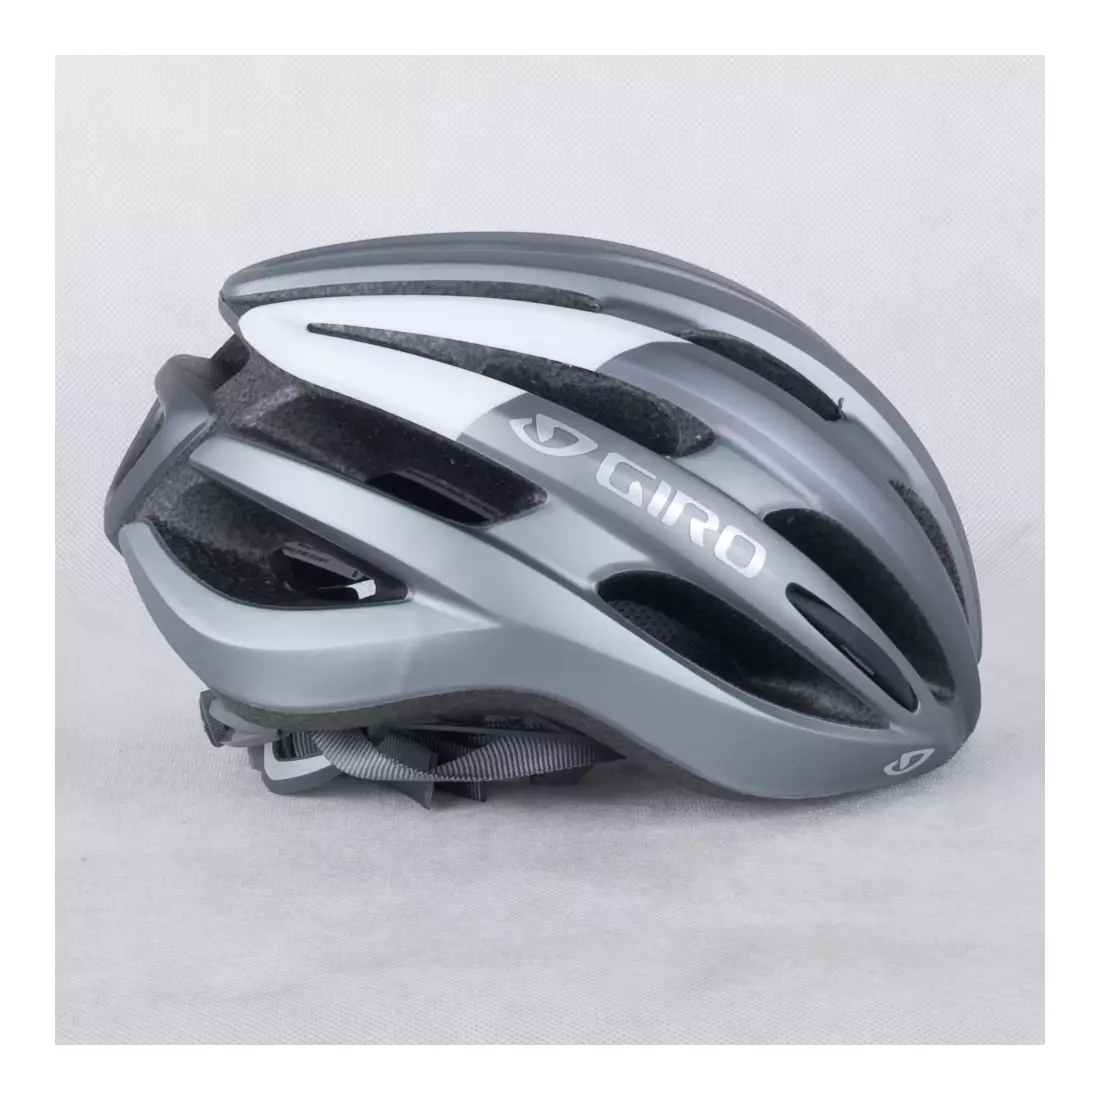 GIRO FORAY - titanium and white matte bicycle helmet